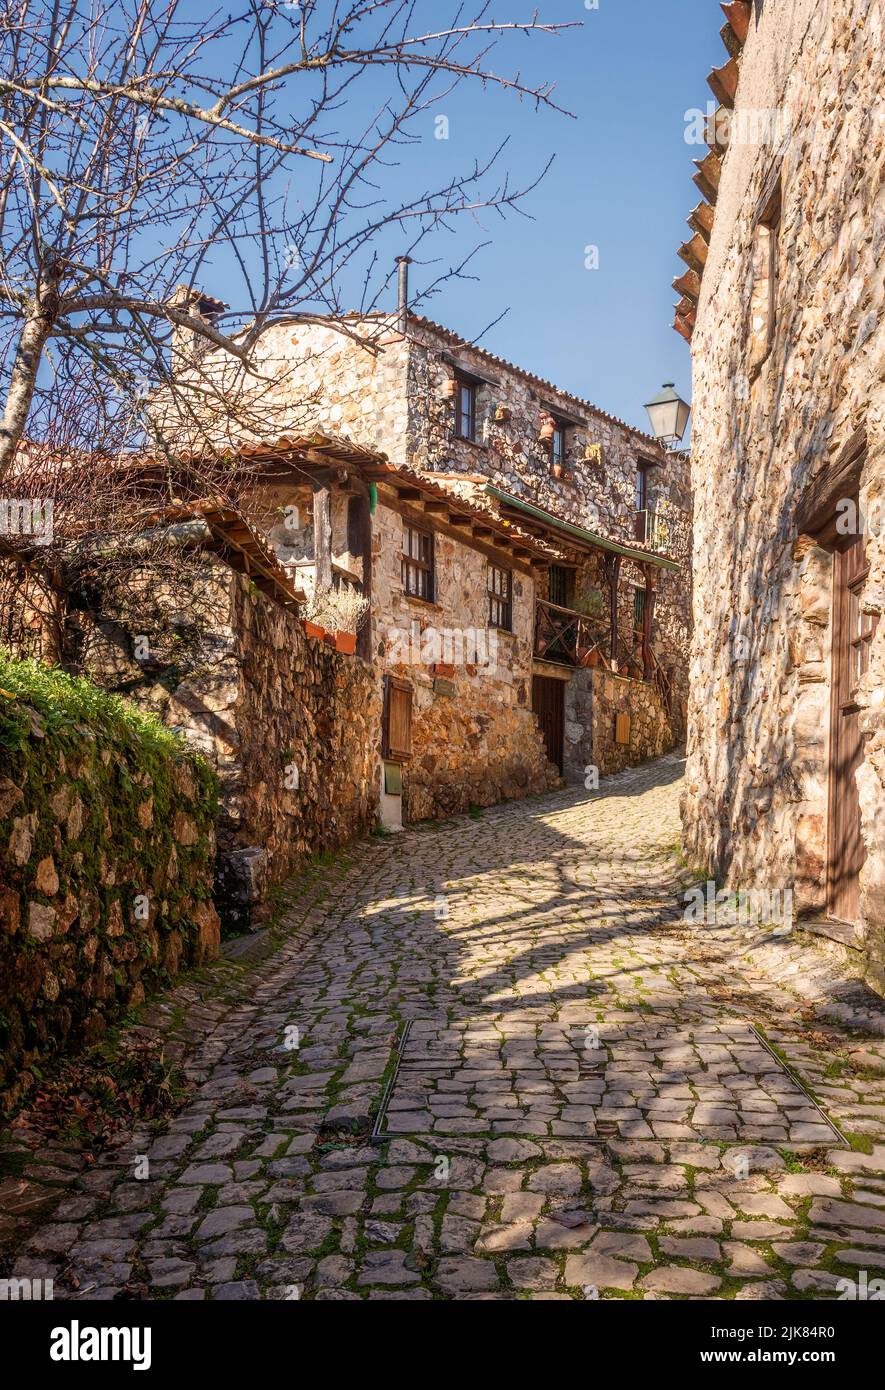 Street view of the schist village of Casal de São Simão in Portugal. Stock Photo